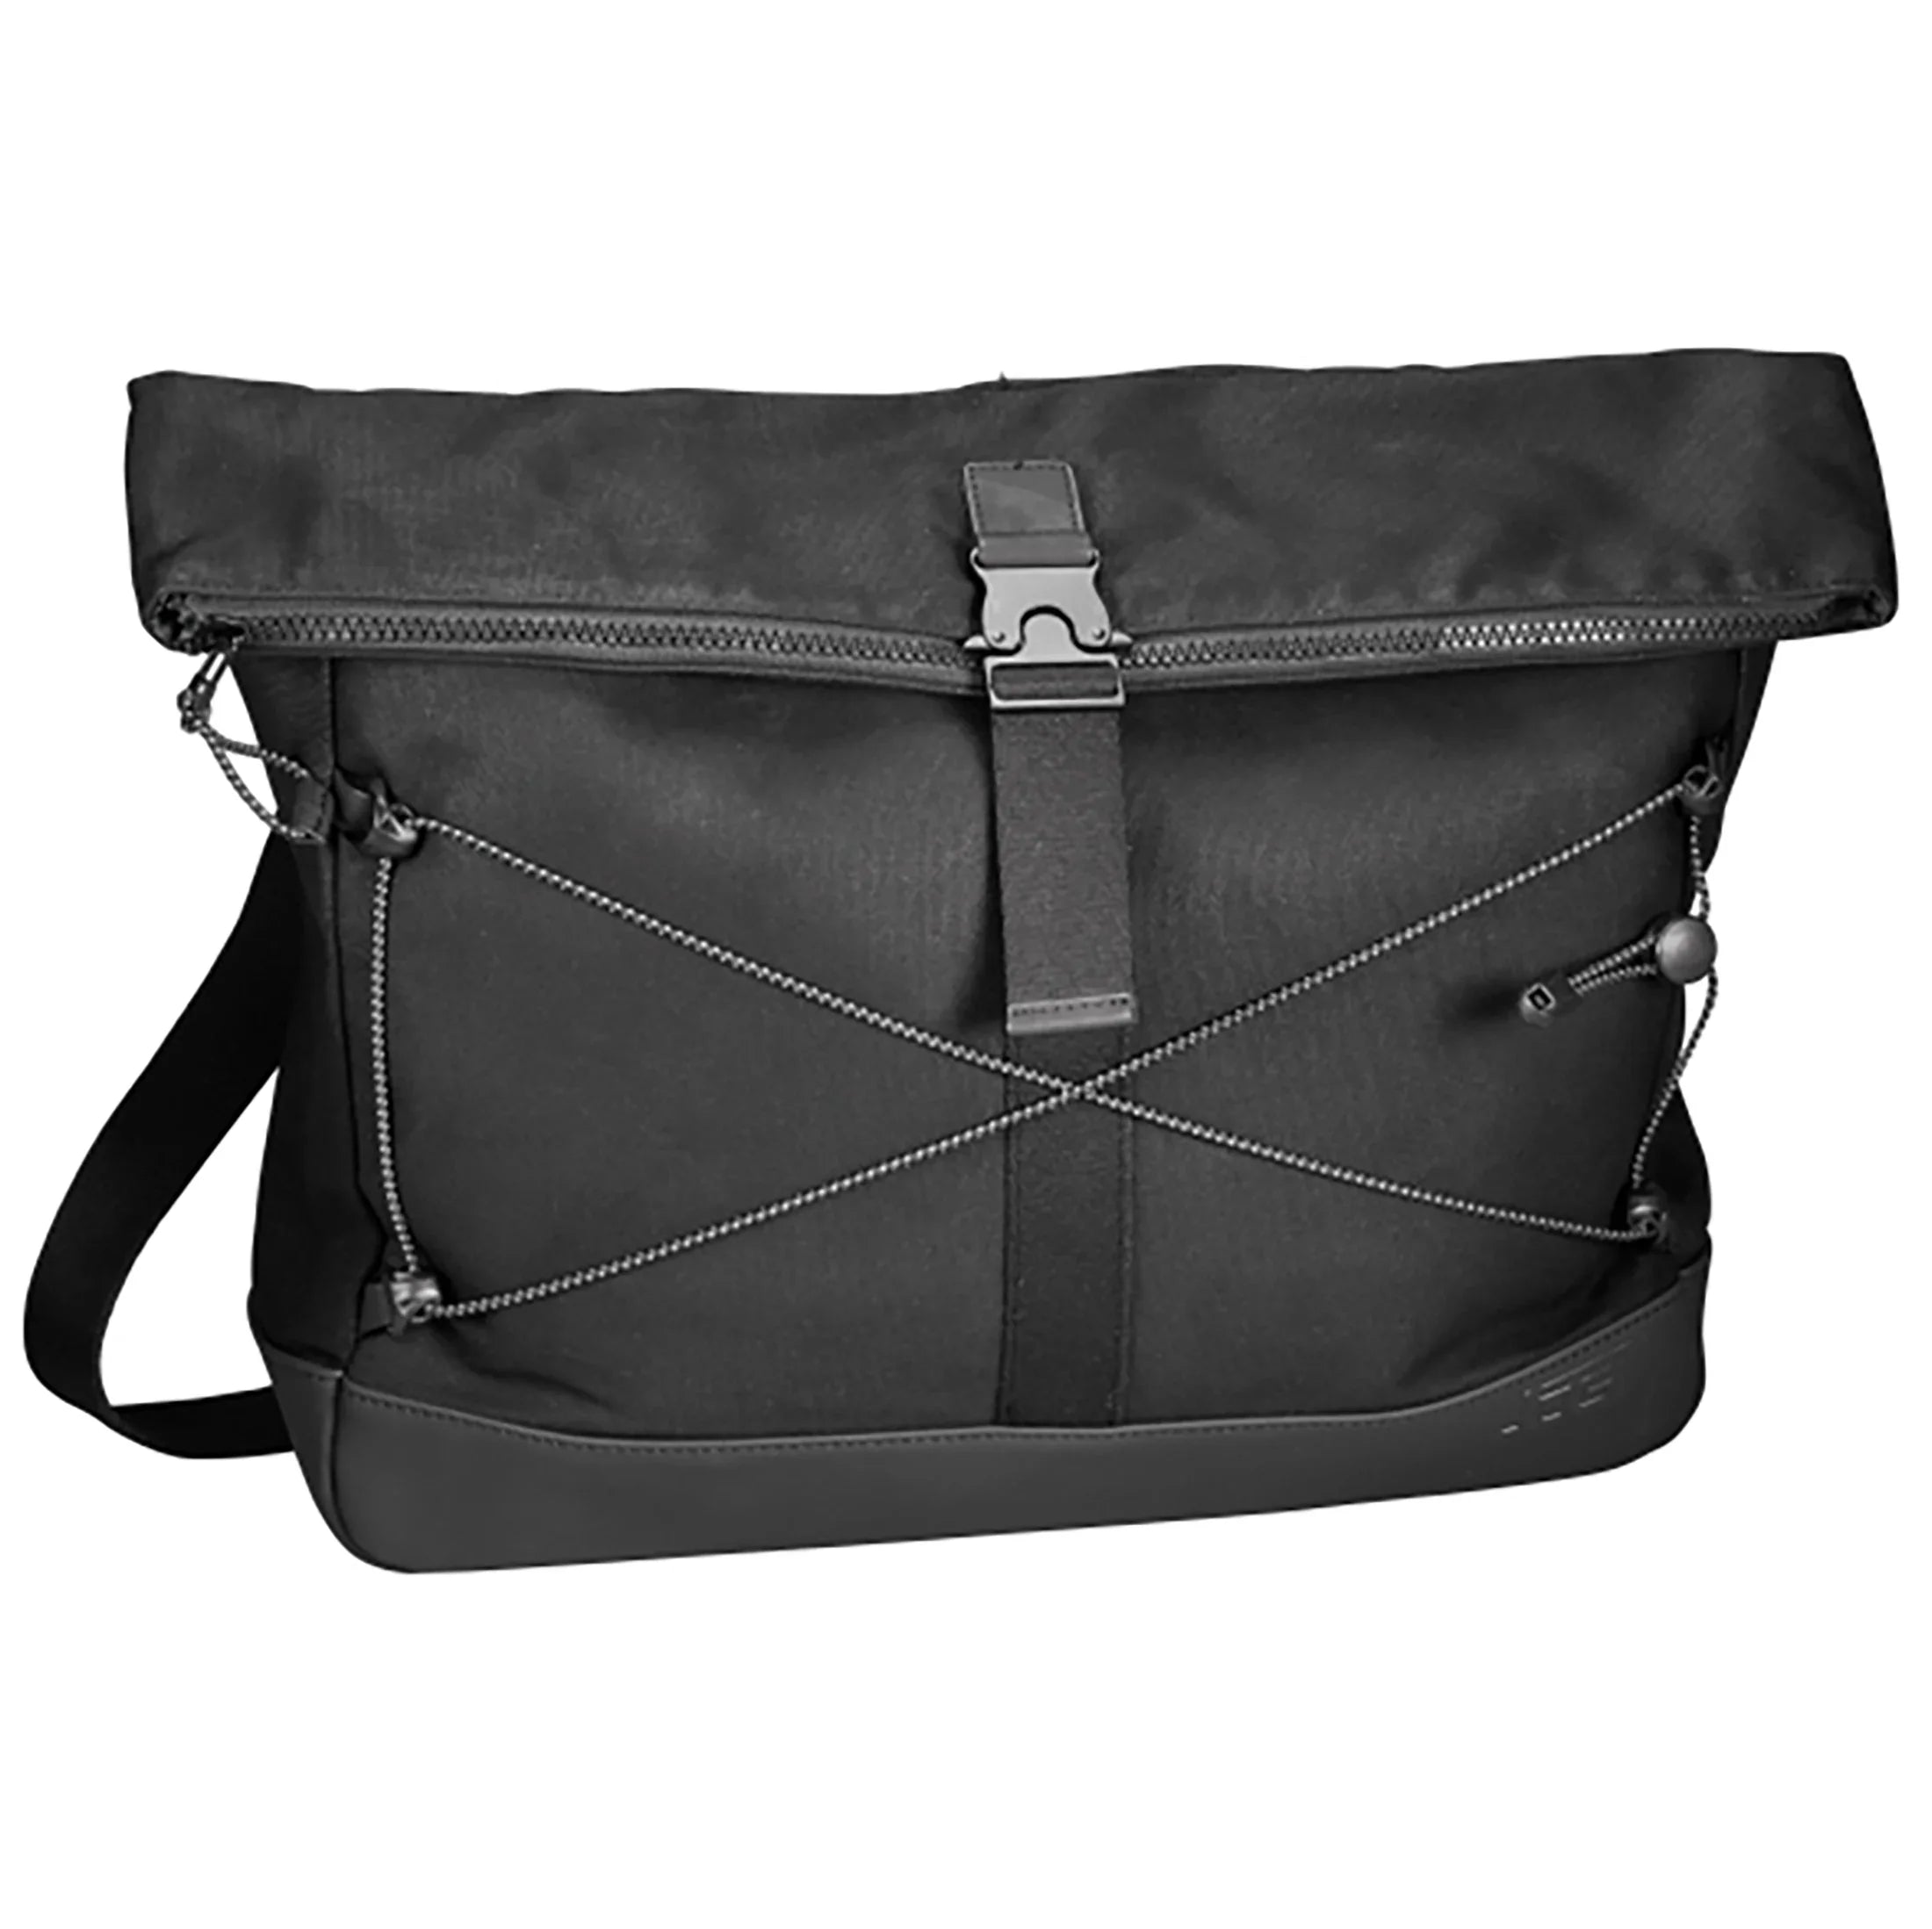 Jost Ystad Kurier shoulder bag with laptop compartment 46 cm - black